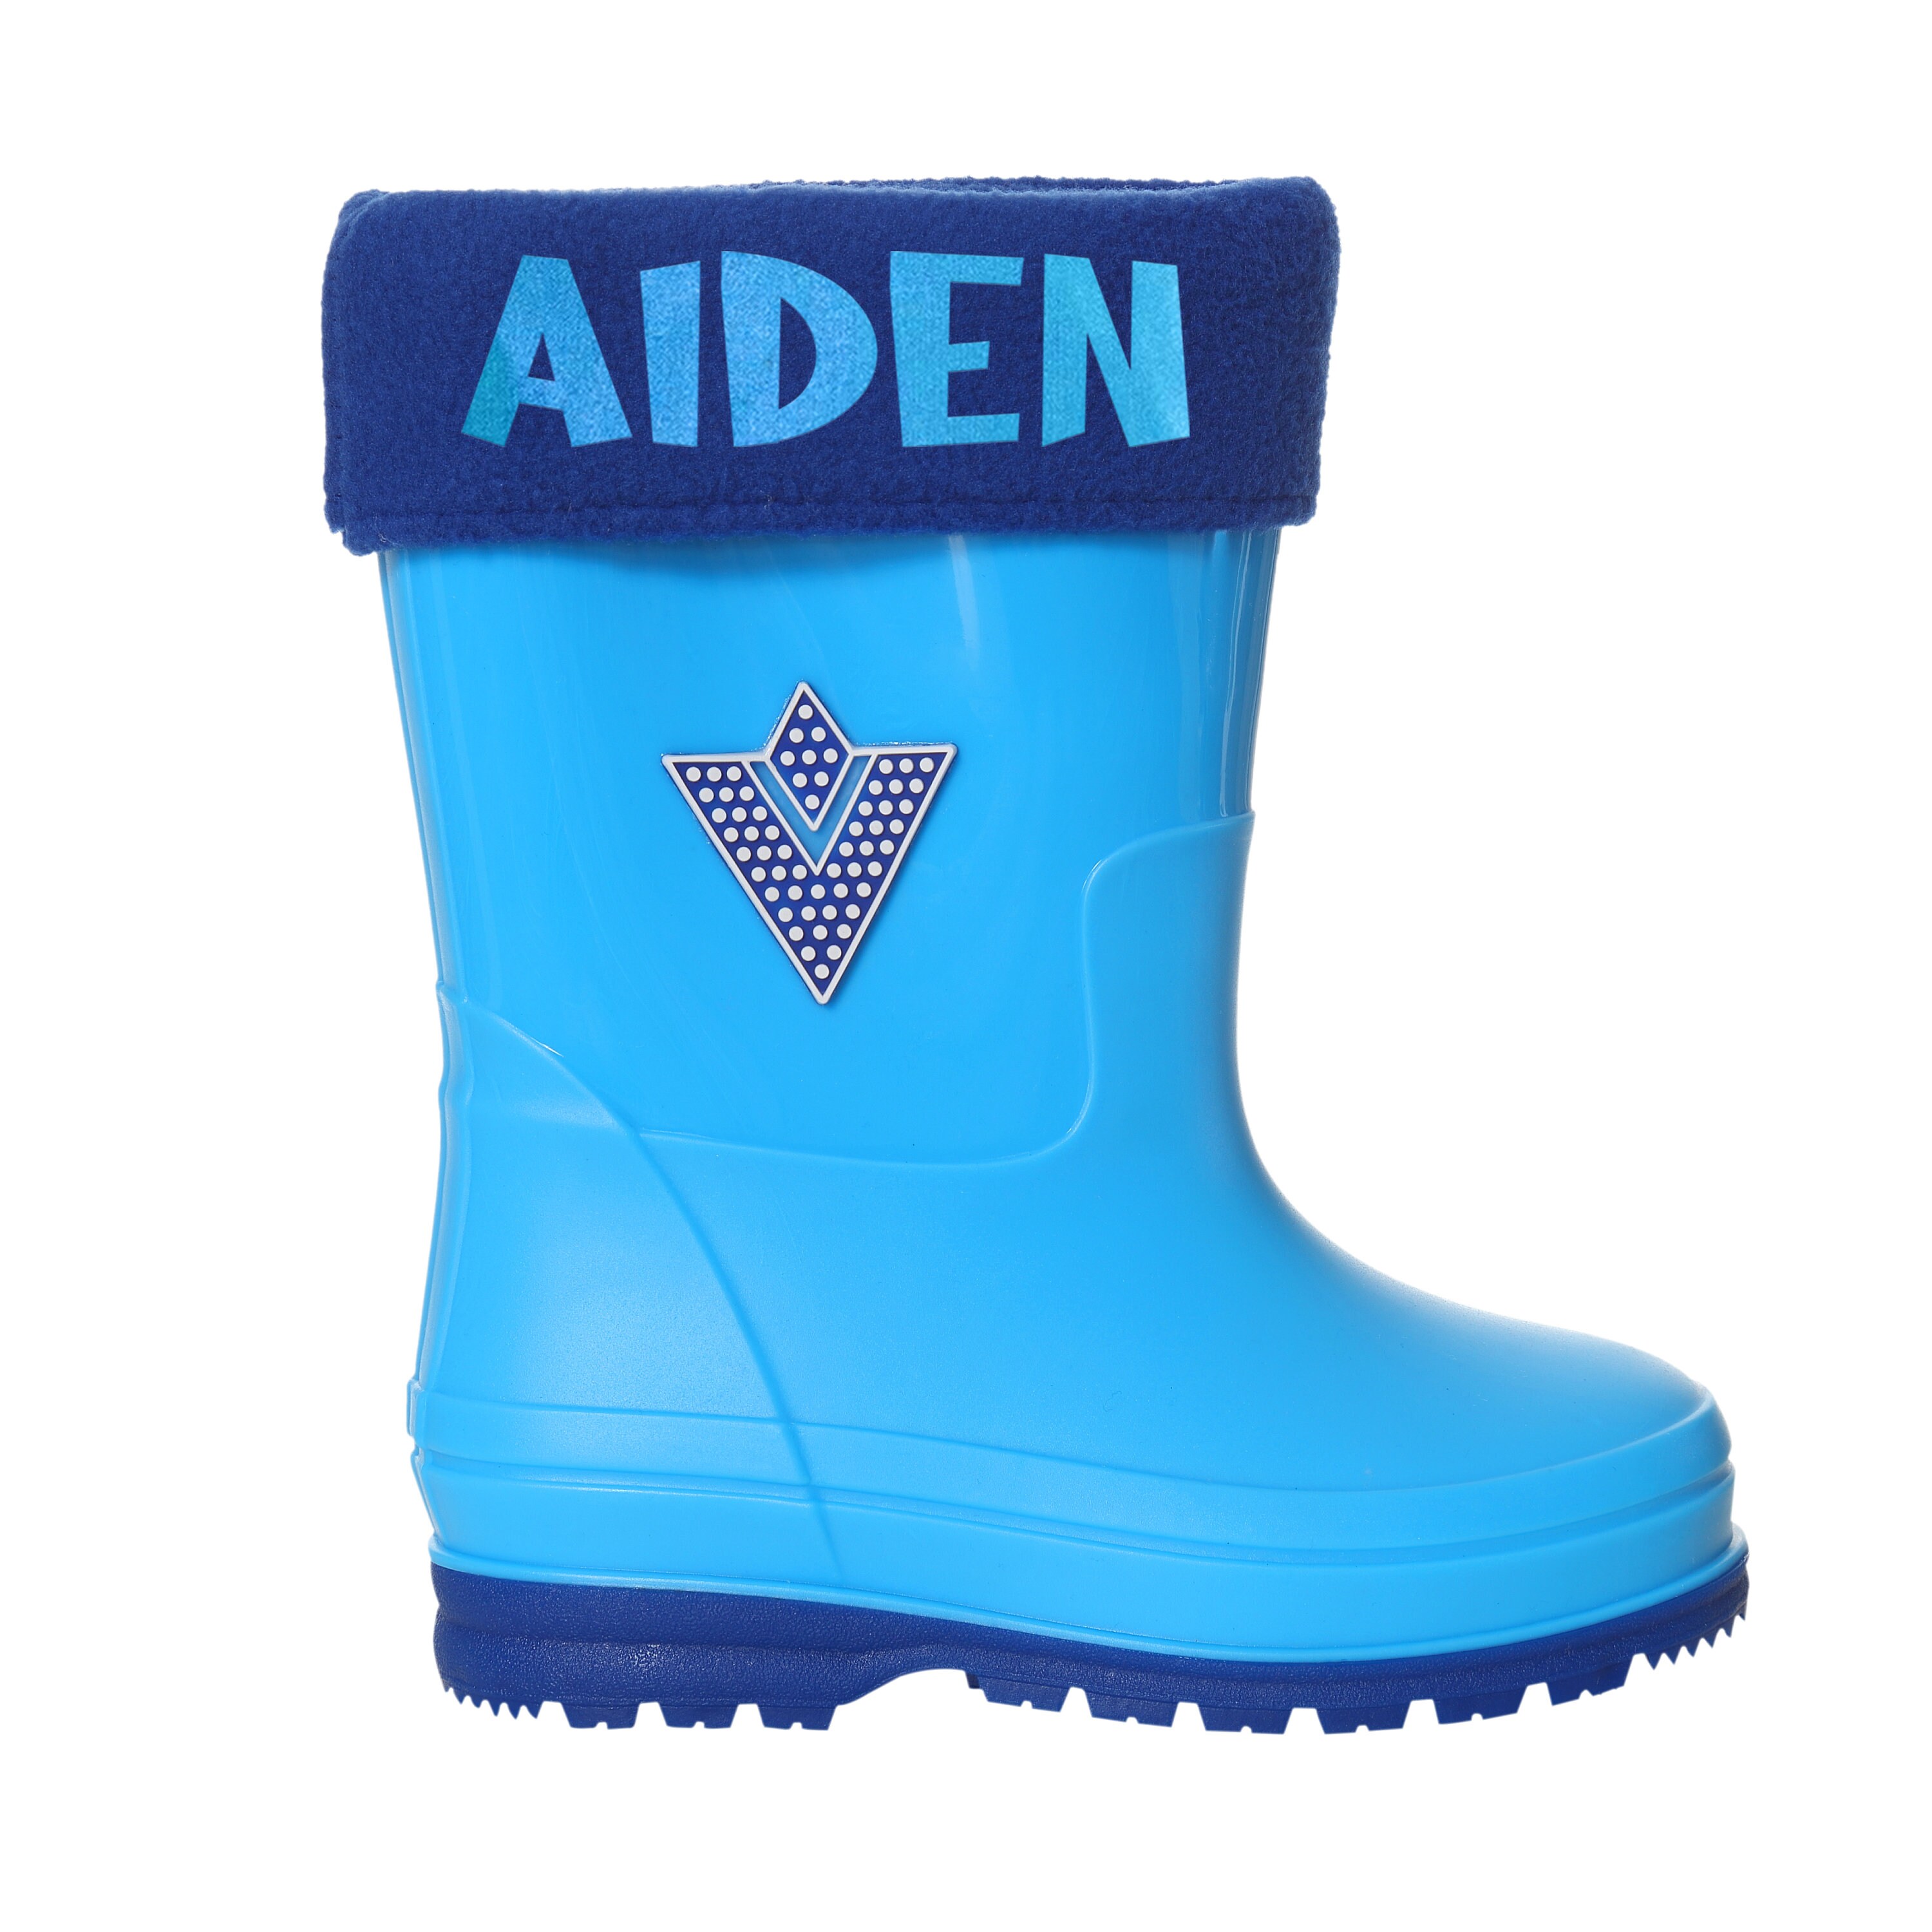 TRIWORIAE-Kids Toddler Rubber Rain Shoes PVC Waterproof Rain Boot Non-Slip Wellington Boots for Children Boys/Girls 